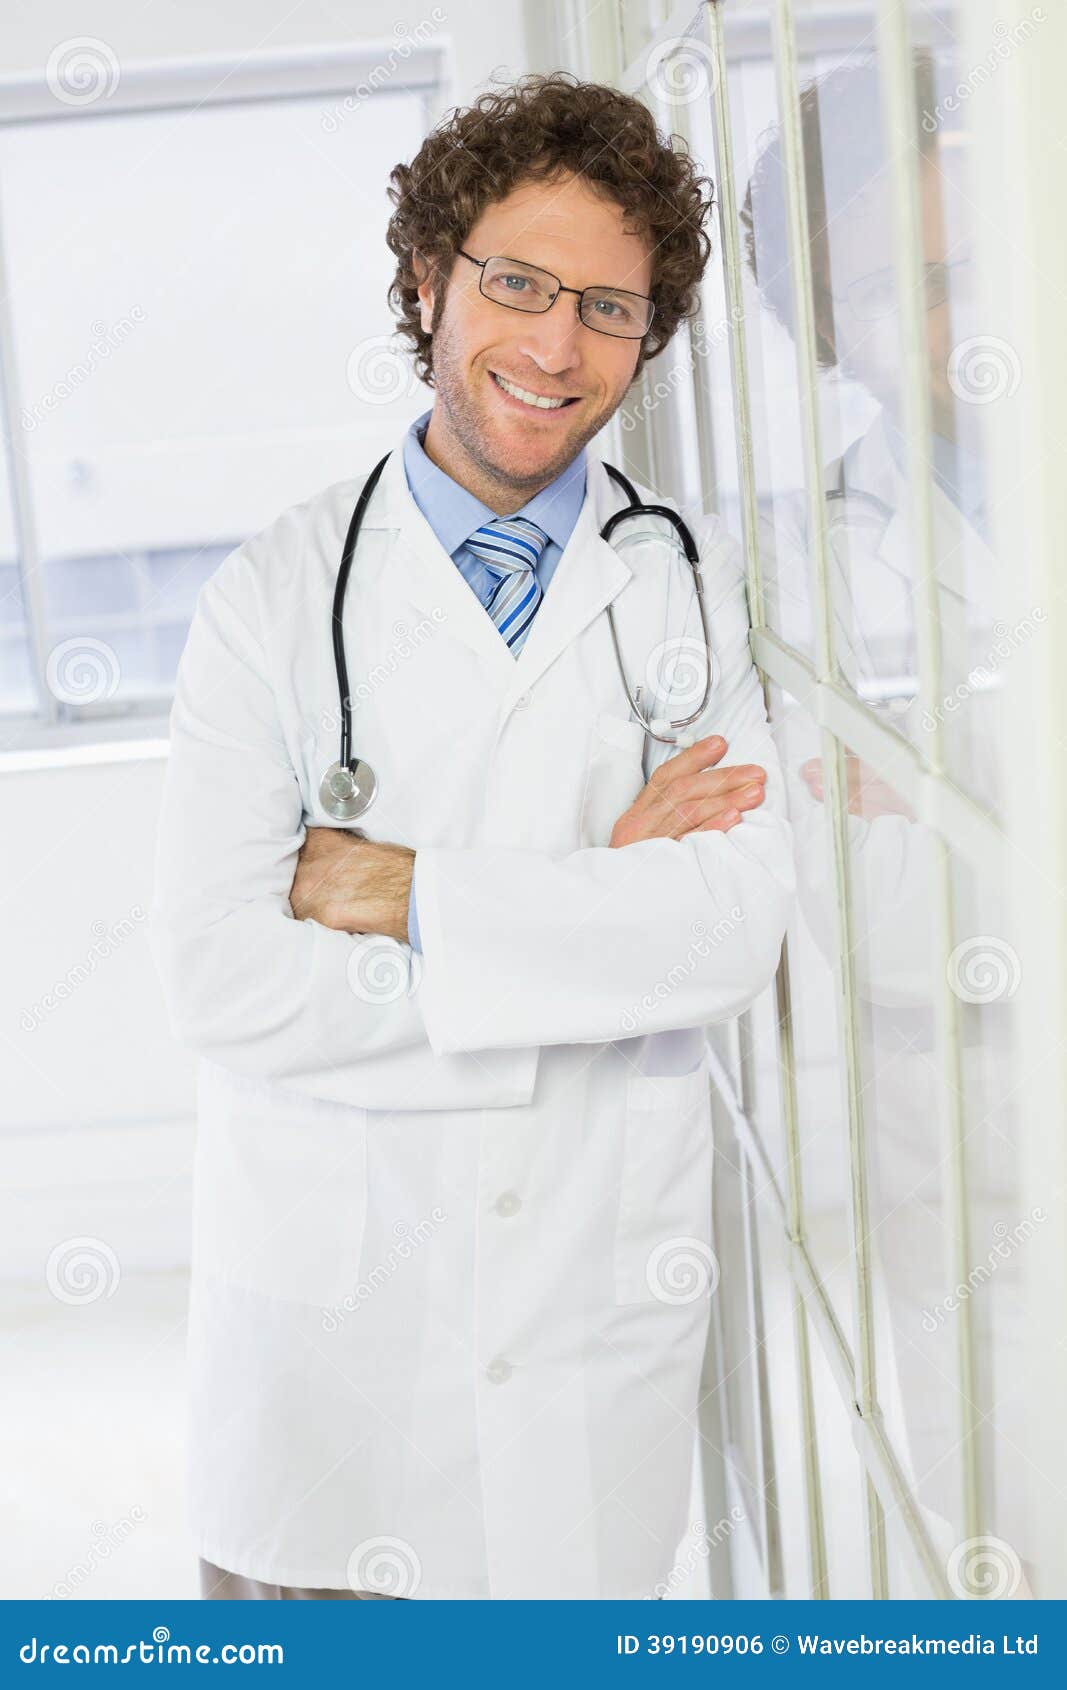 Мужчина врач форум. Красивый врач мужчина. Врач мужчина Кореновска. Молодые парни врачи. Доктор мужчина фото в очках телеведущих.